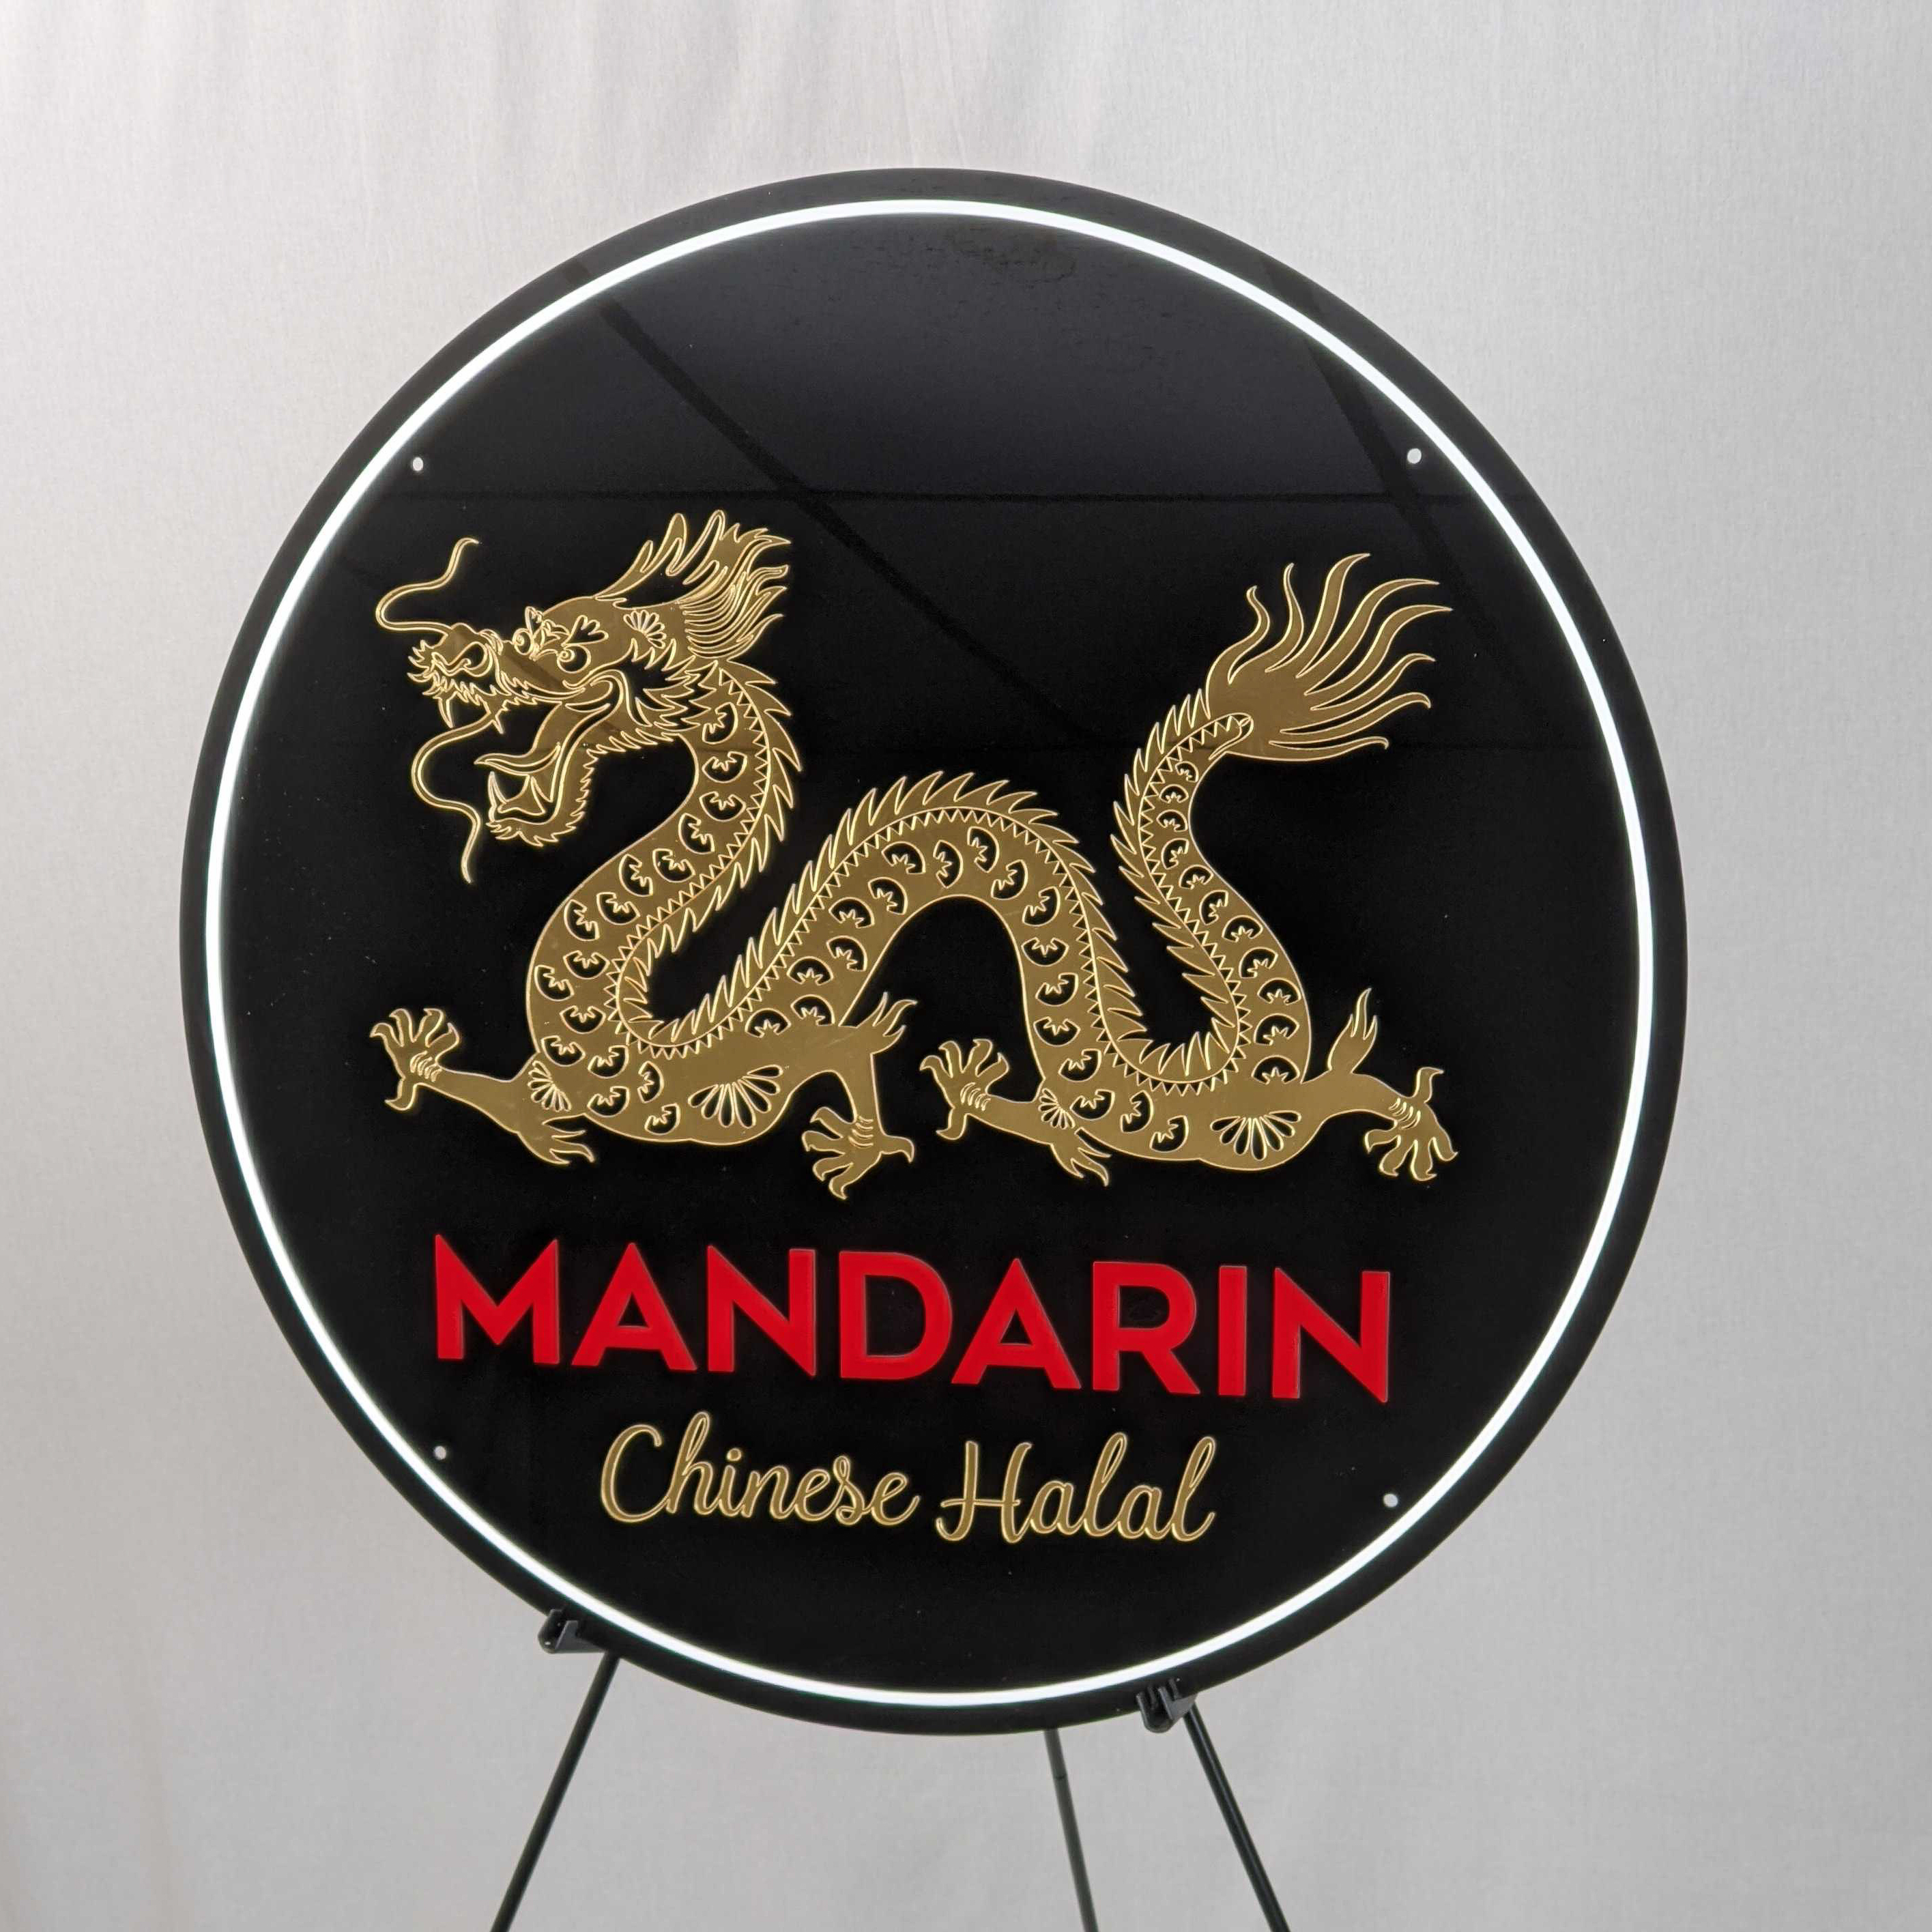 Mandarin Chinese Halal